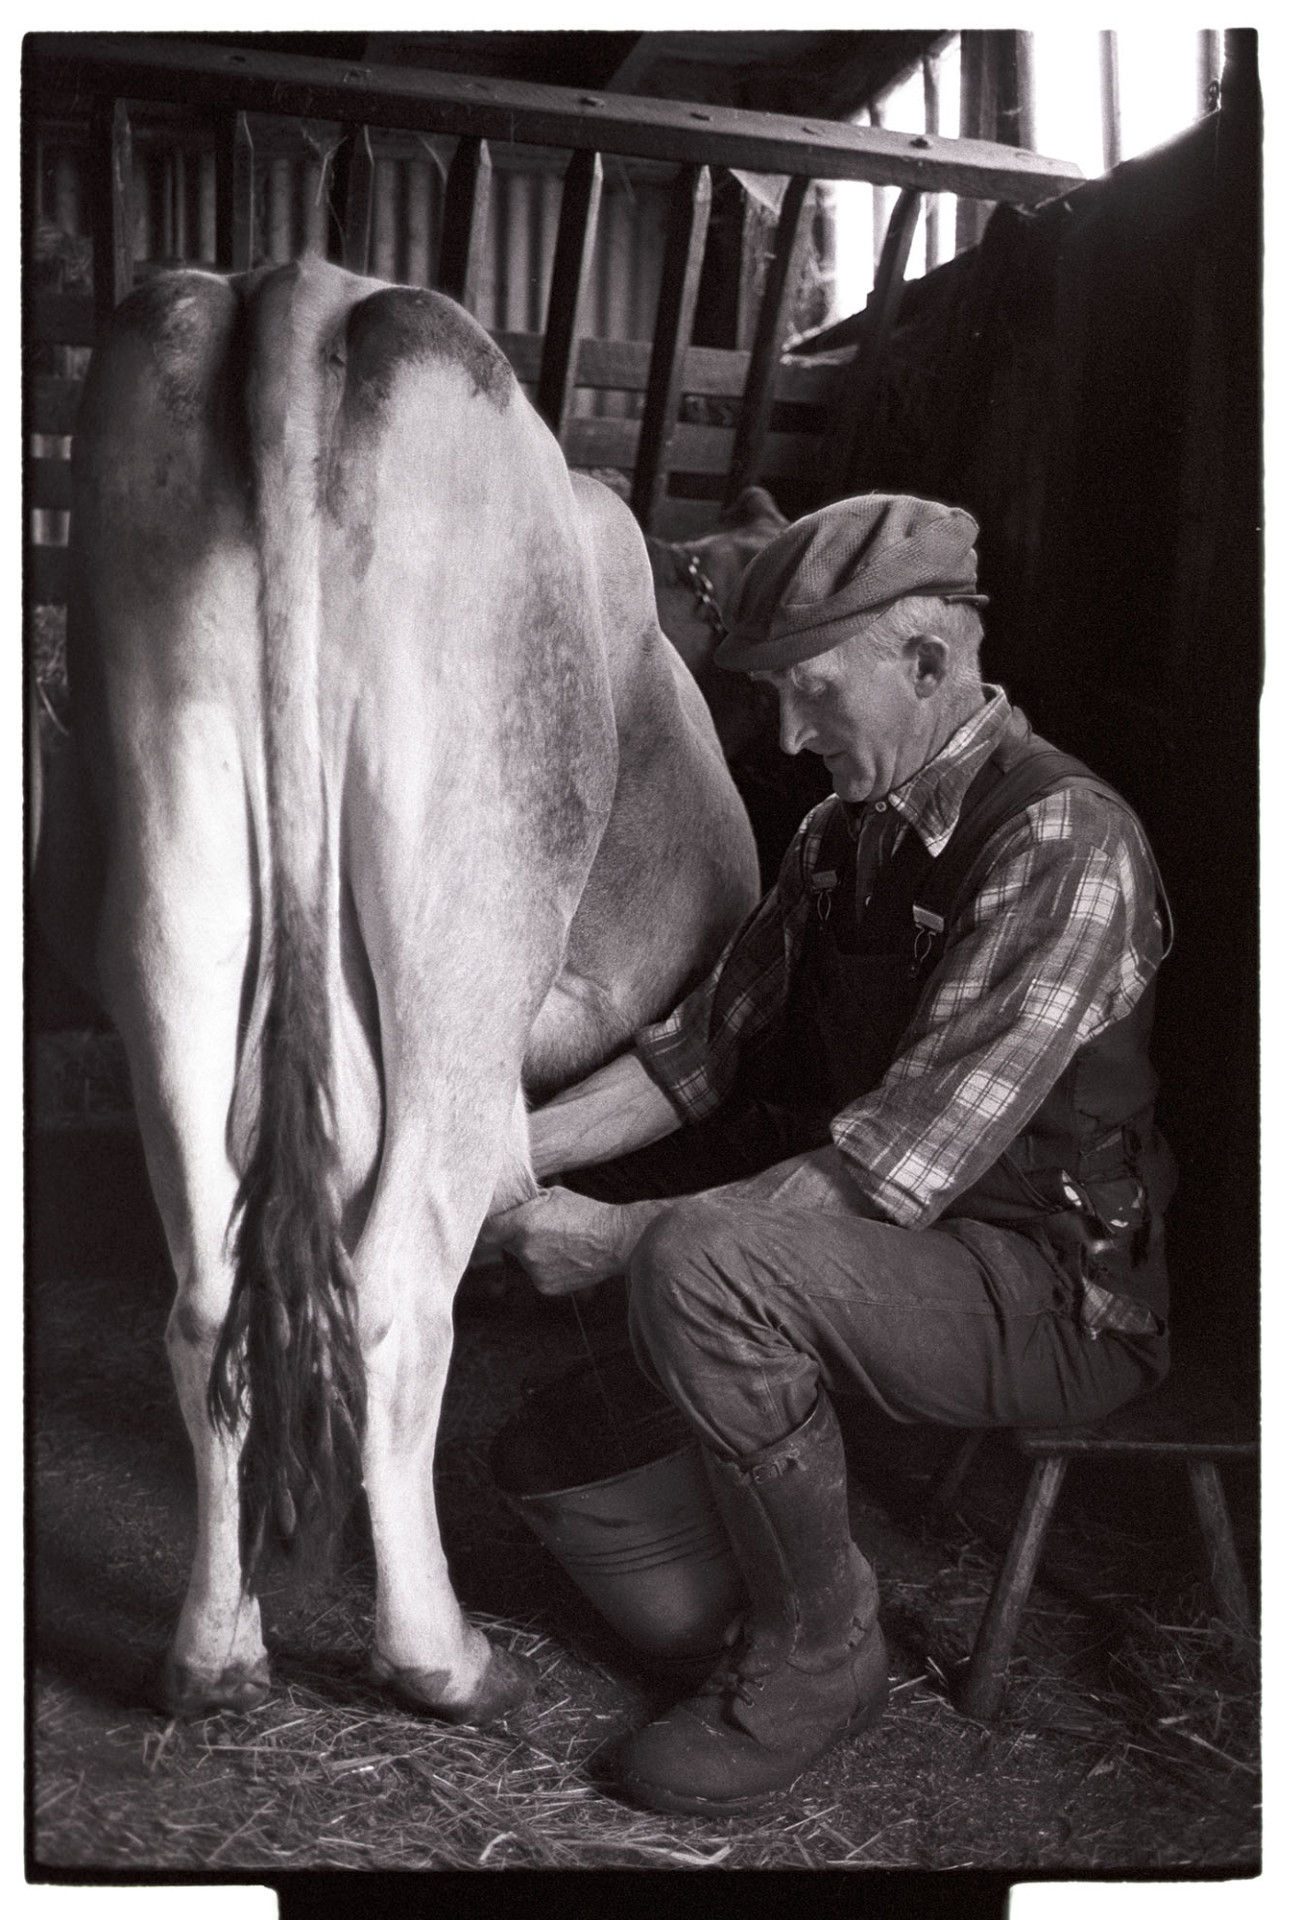 Farmer milking cow by hand.
[Gordon Sanders sitting on a stool milking a cow by hand in a milking parlour at Reynards Park, Ashreigney.]